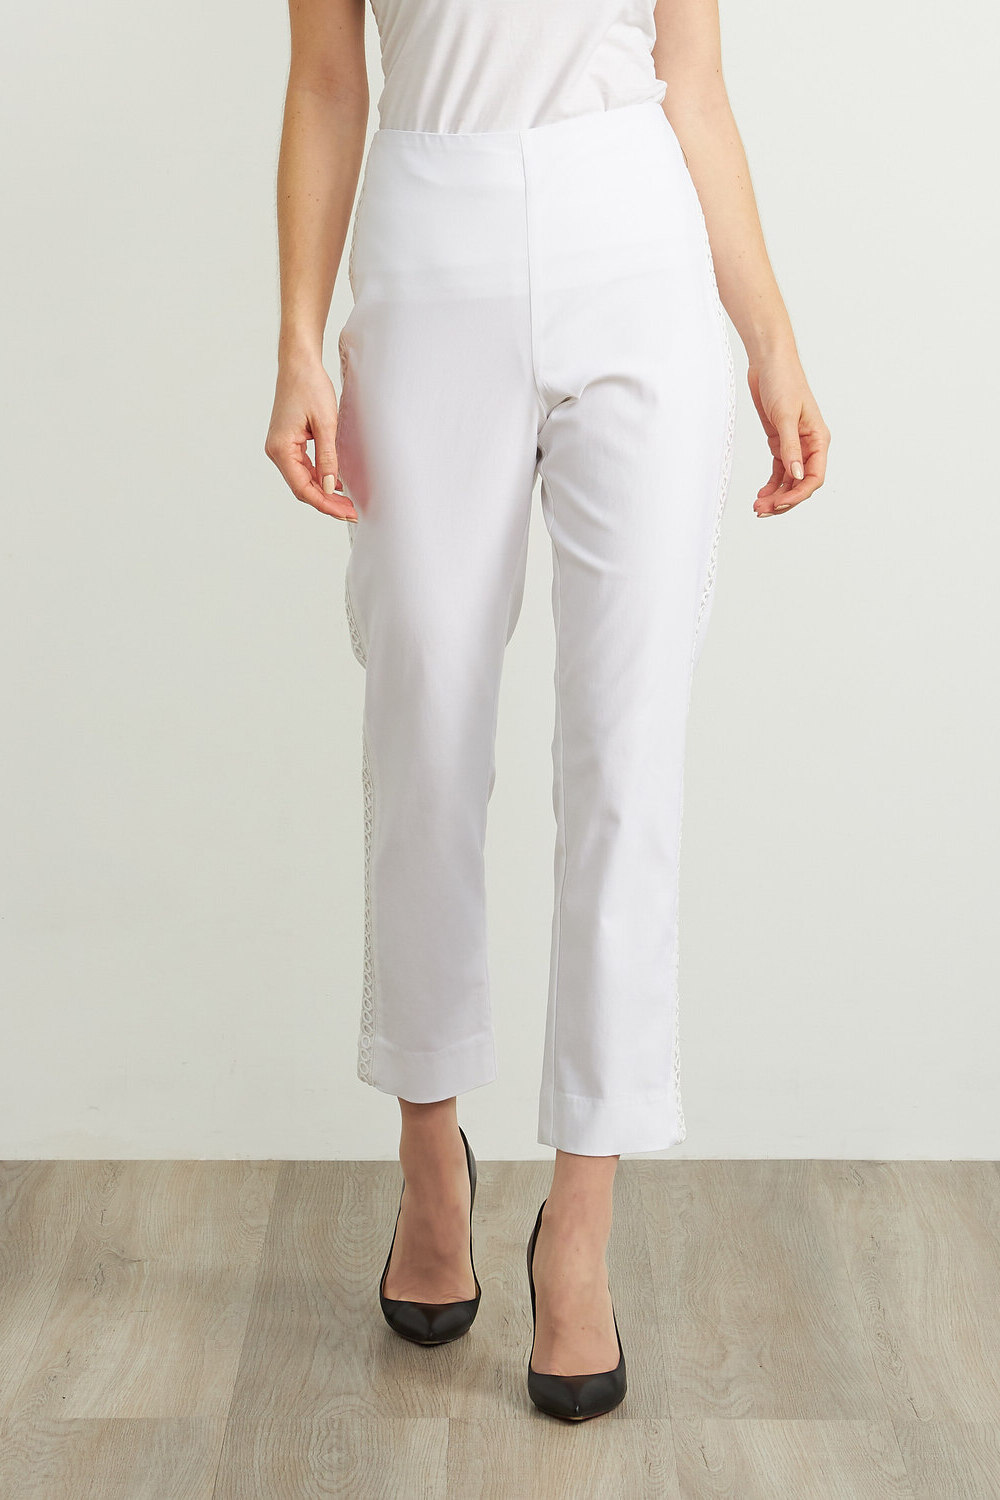 Joseph Ribkoff Embroidered Trim Pants Style 211241. White